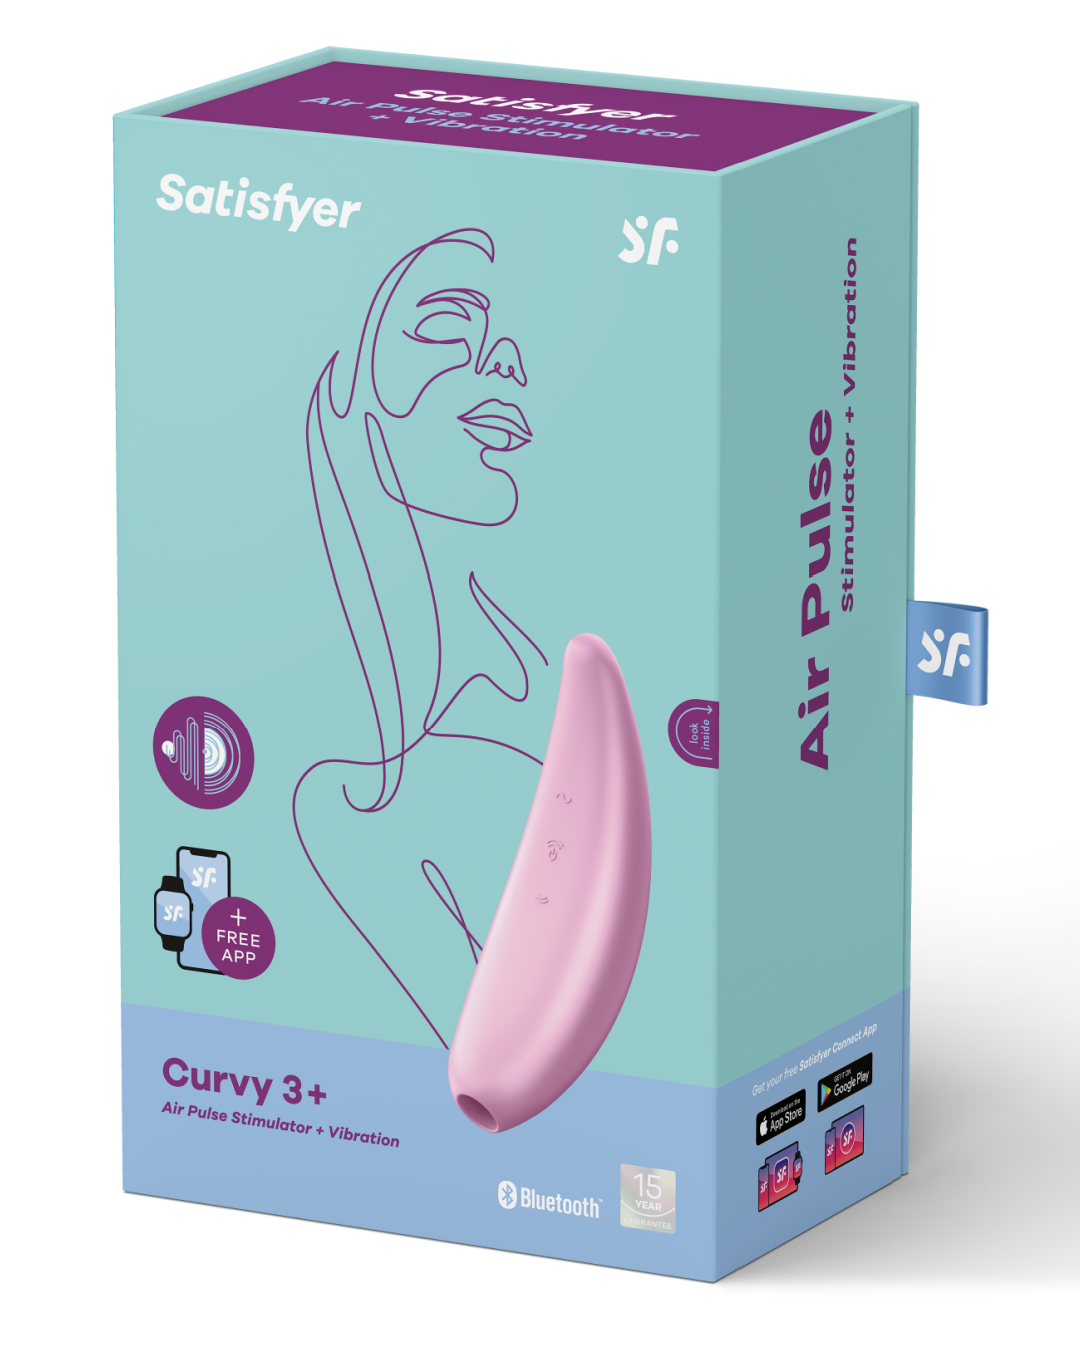 Satisfyer Curvy 3+ Pressure Wave + Vibration Stimulator - Pale Pink in the box